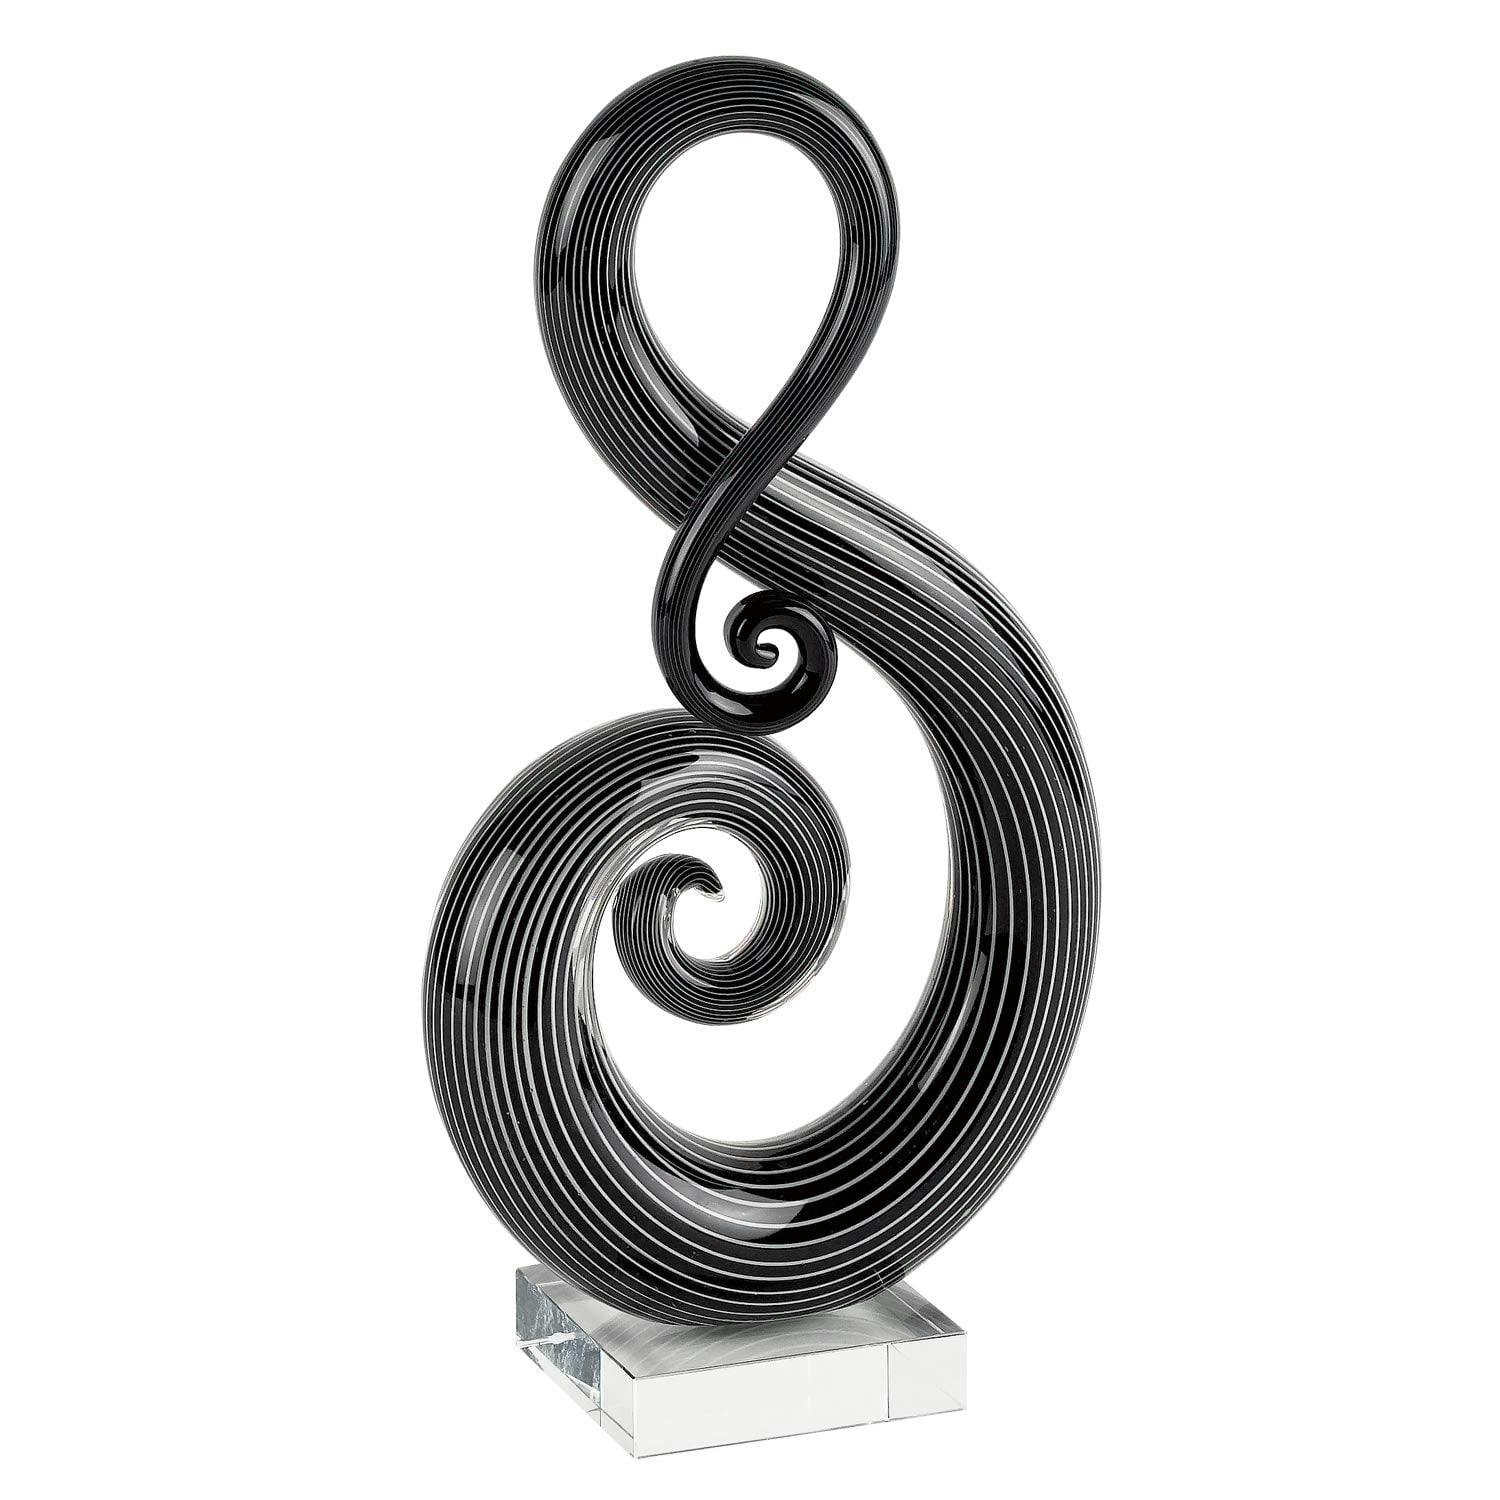 12" Murano-Inspired Art Glass Centerpiece - Black and White Note